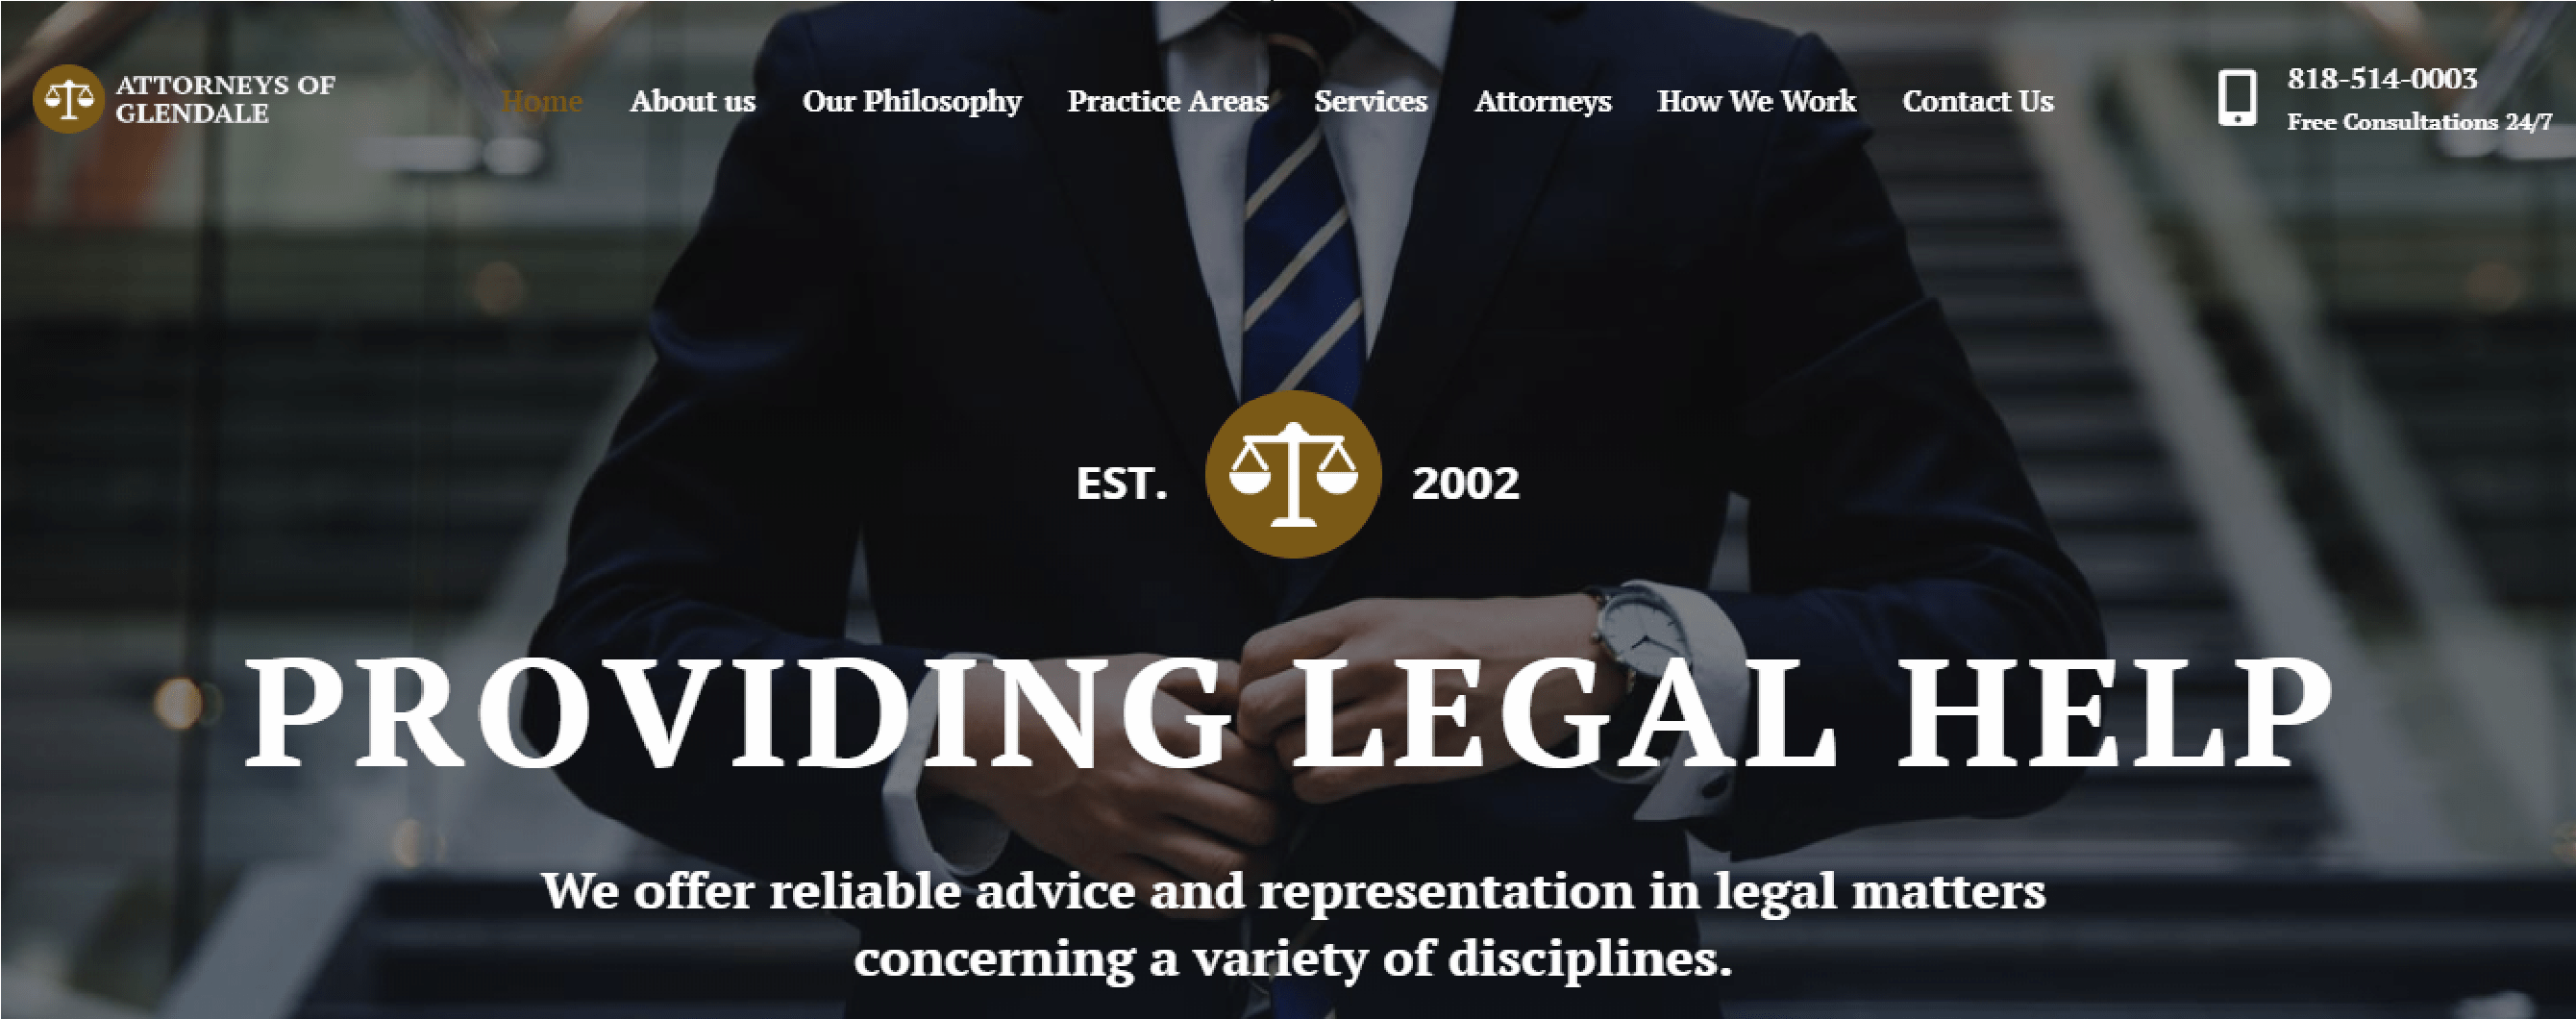 Responsive website development for Attorneys of Glendale